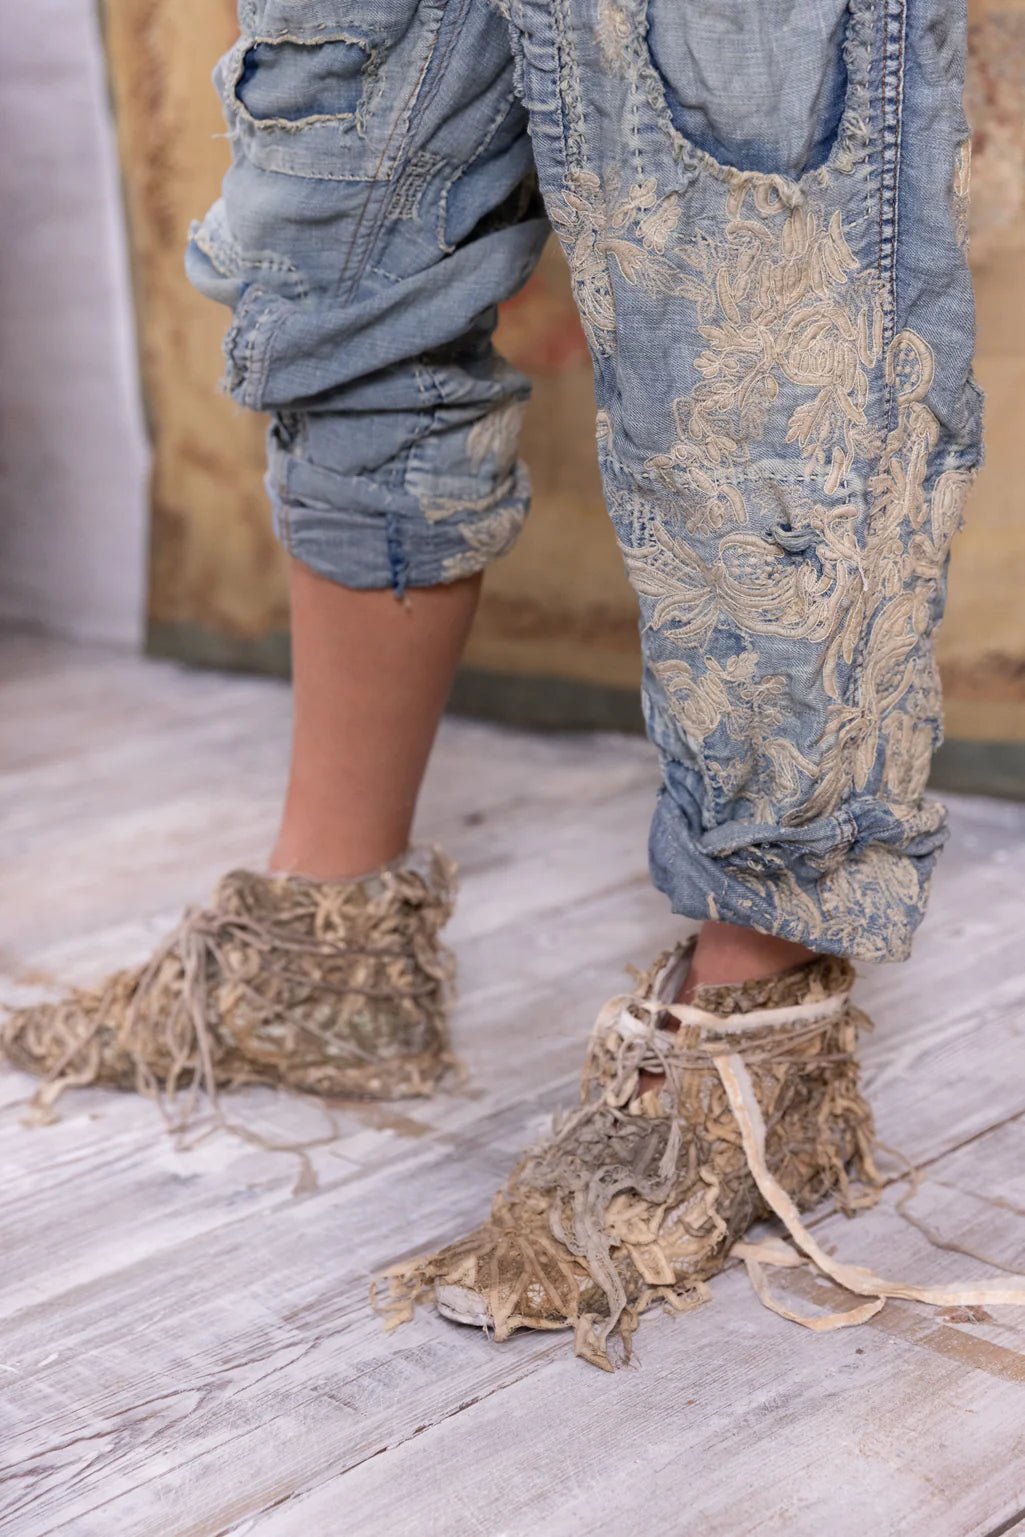 Lace Embroidered Miner Denims Pants 520 - Washed IndigoMagnolia PearlPants